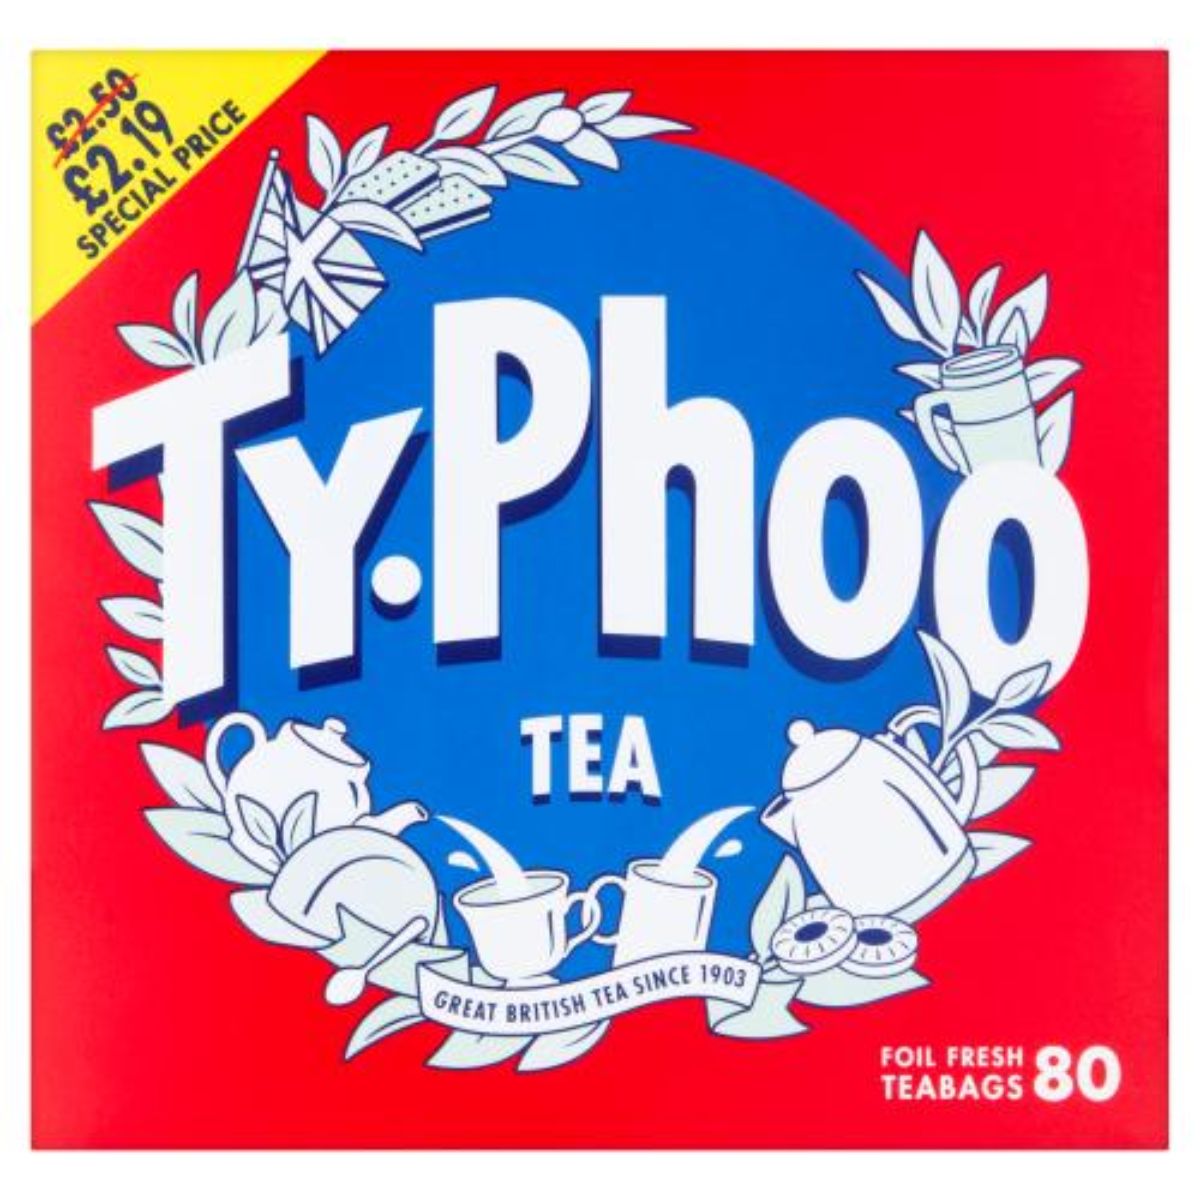 Typhoo - Tea 80 Foil Fresh Teabags - 232g in a box.